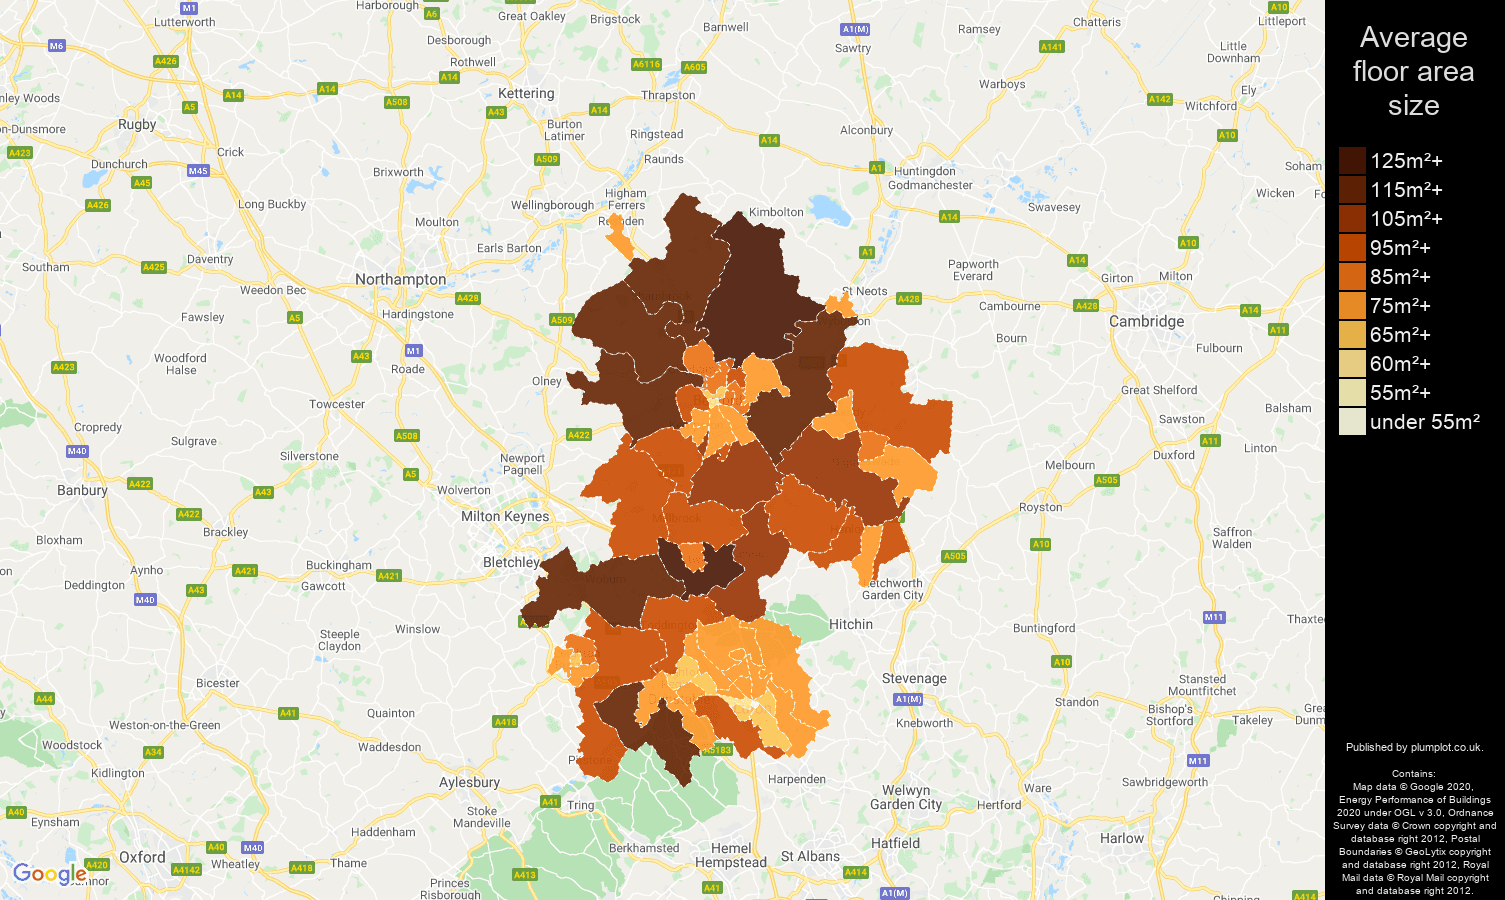 Bedfordshire map of average floor area size of properties